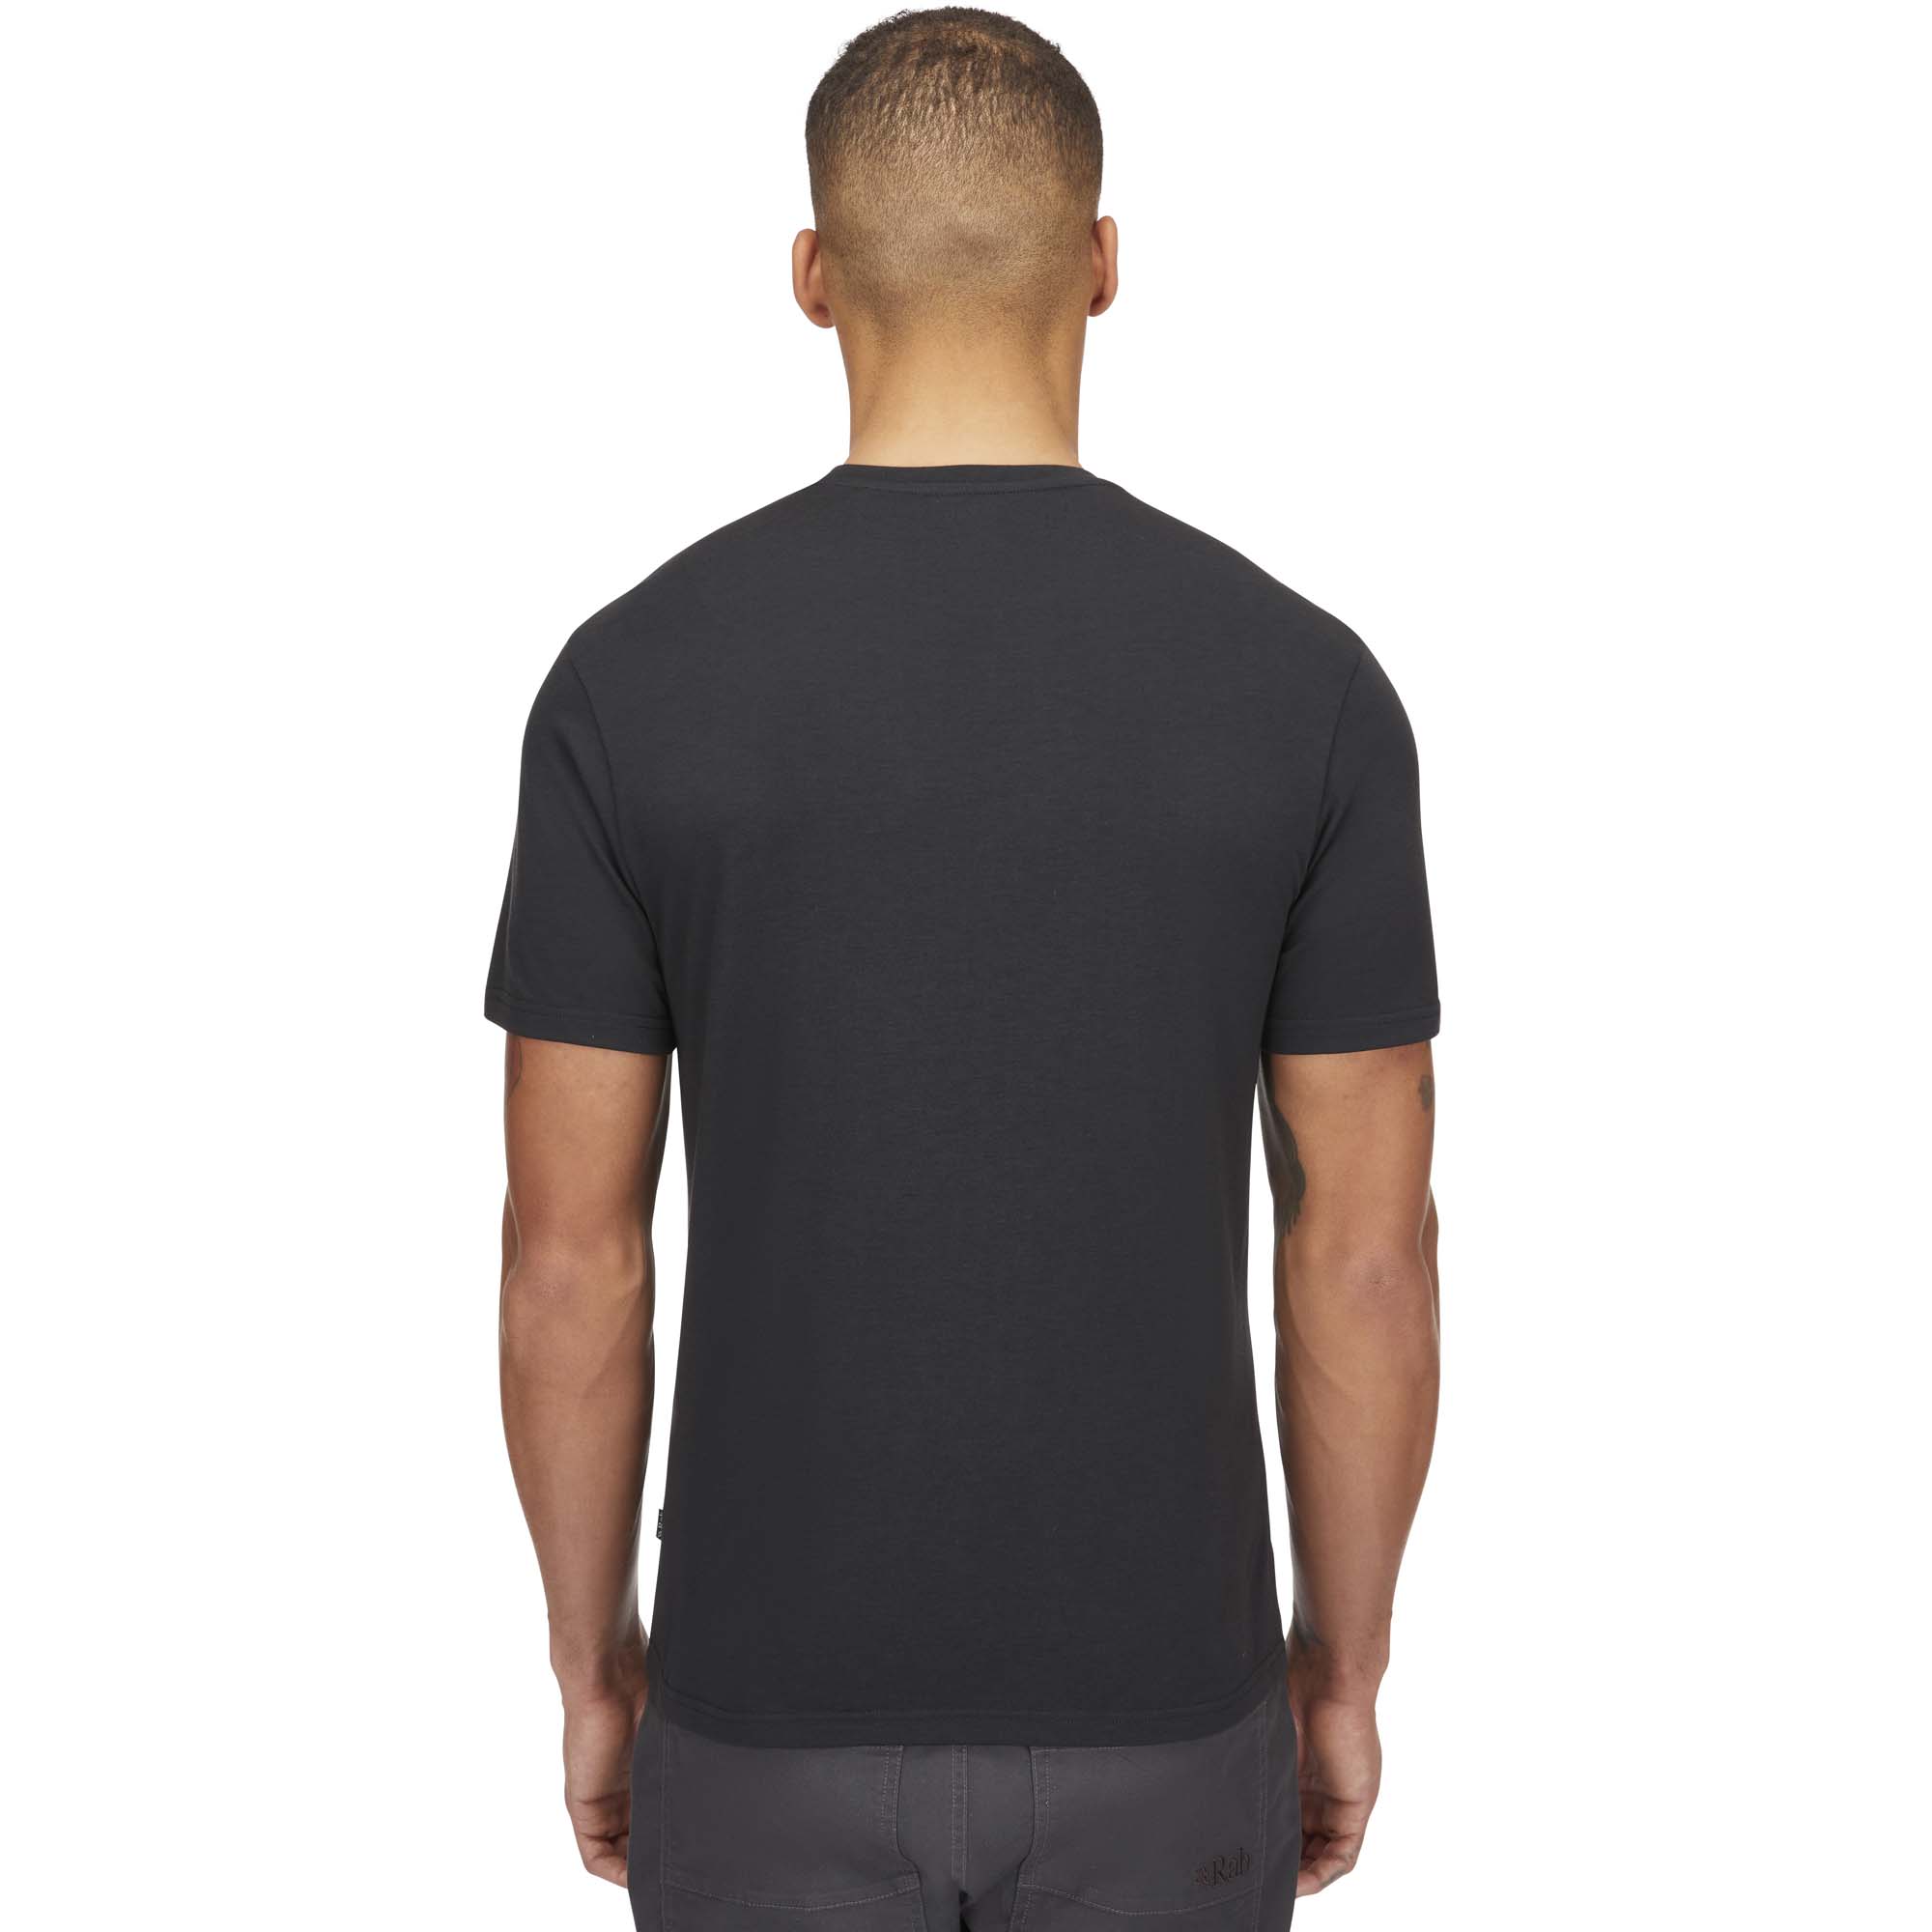 Rab Crimp Reflection Tee Men's Short Sleeve T-Shirt